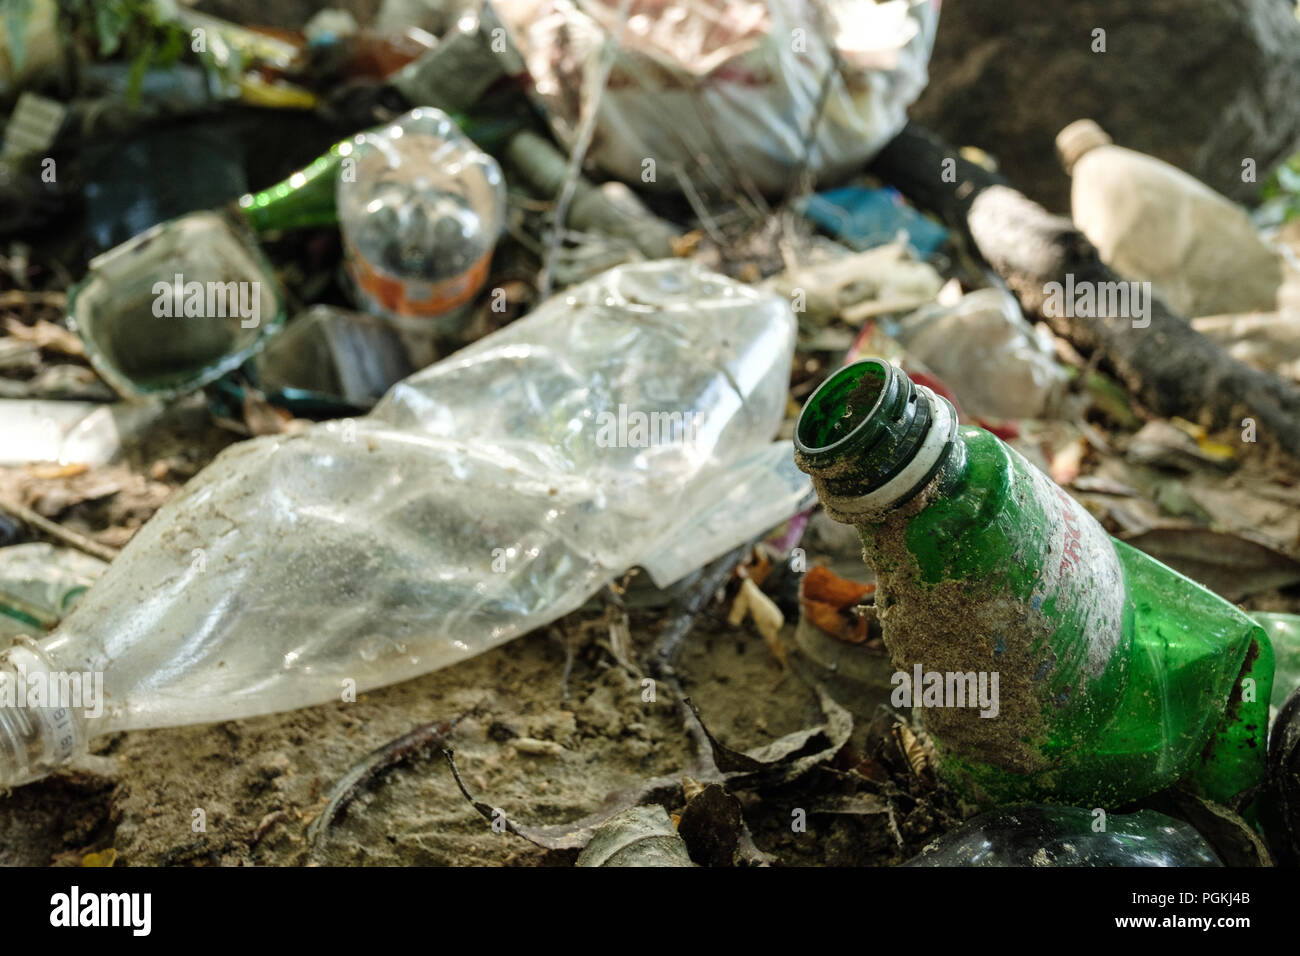 Plastic debris pollutes the nature. Plastic bottle. Stock Photo